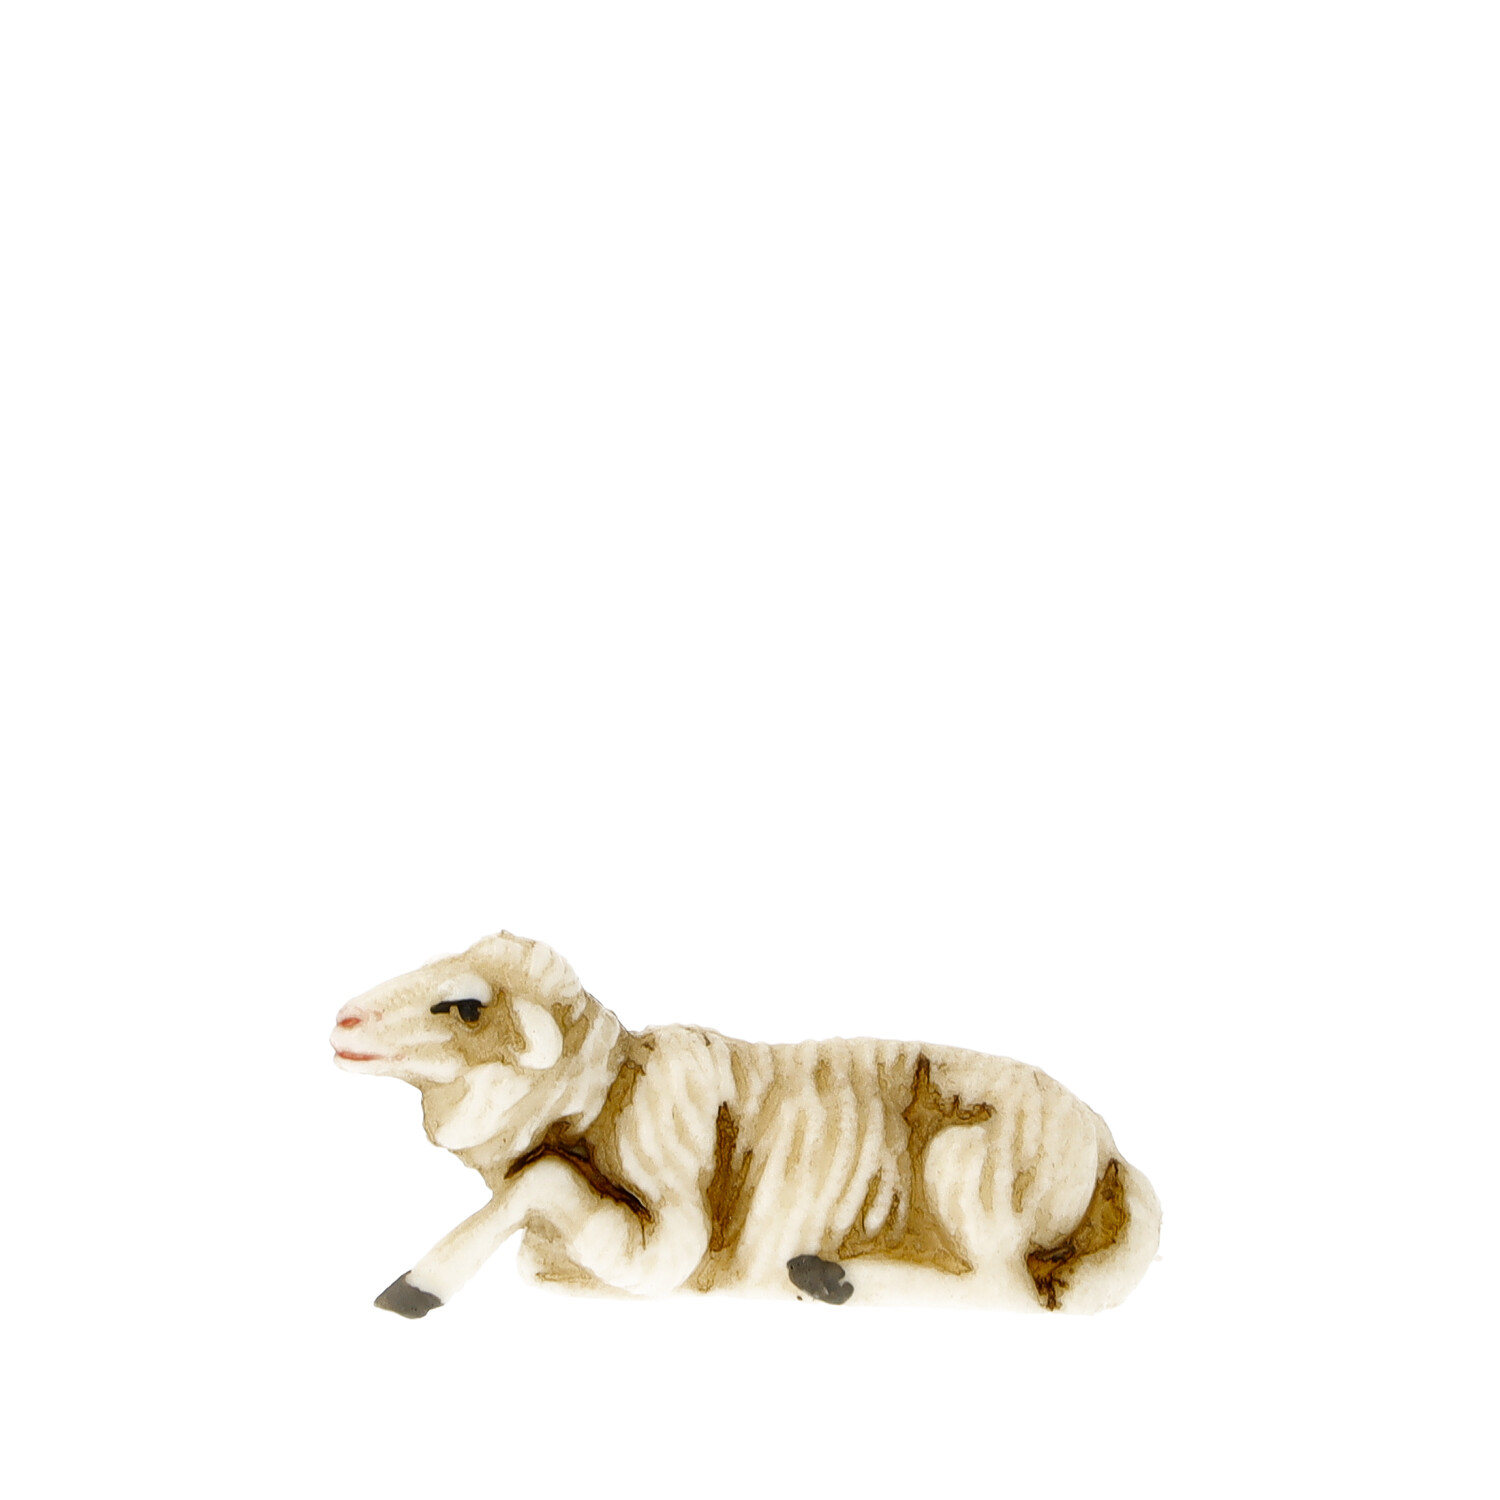 Lying sheep - Marolin Plastik - Resin Nativity figure - made in Germany